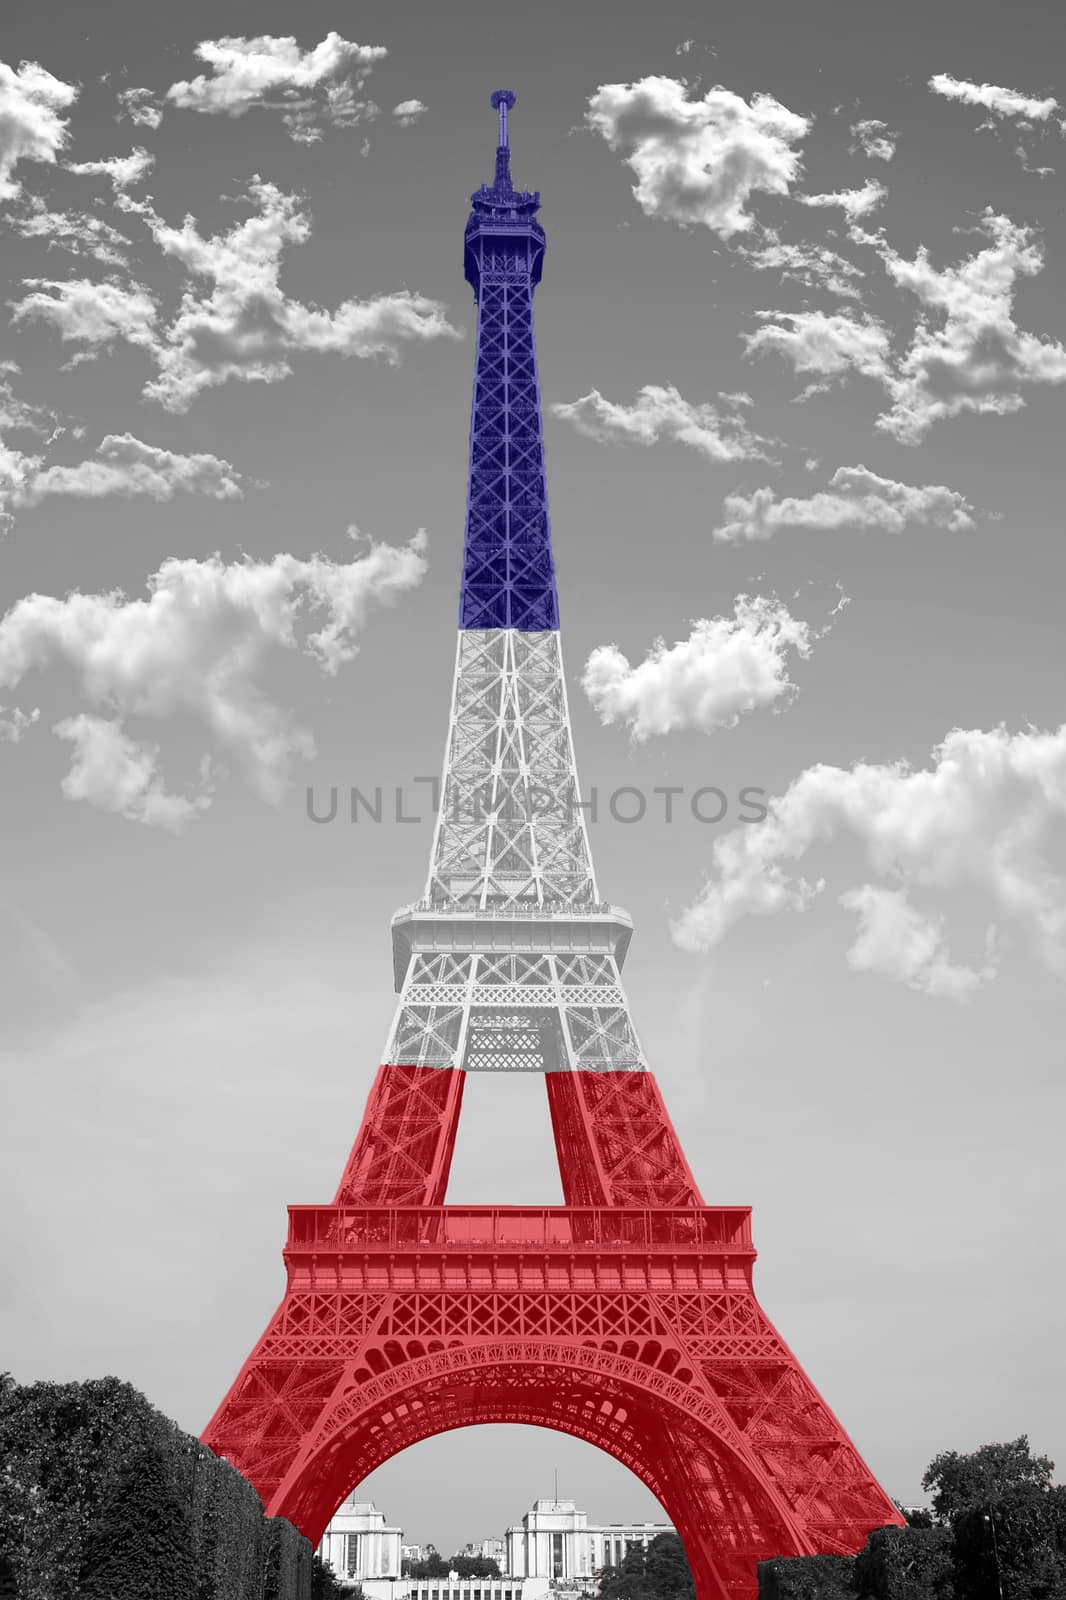 The Eiffel Tower in Paris by johan10